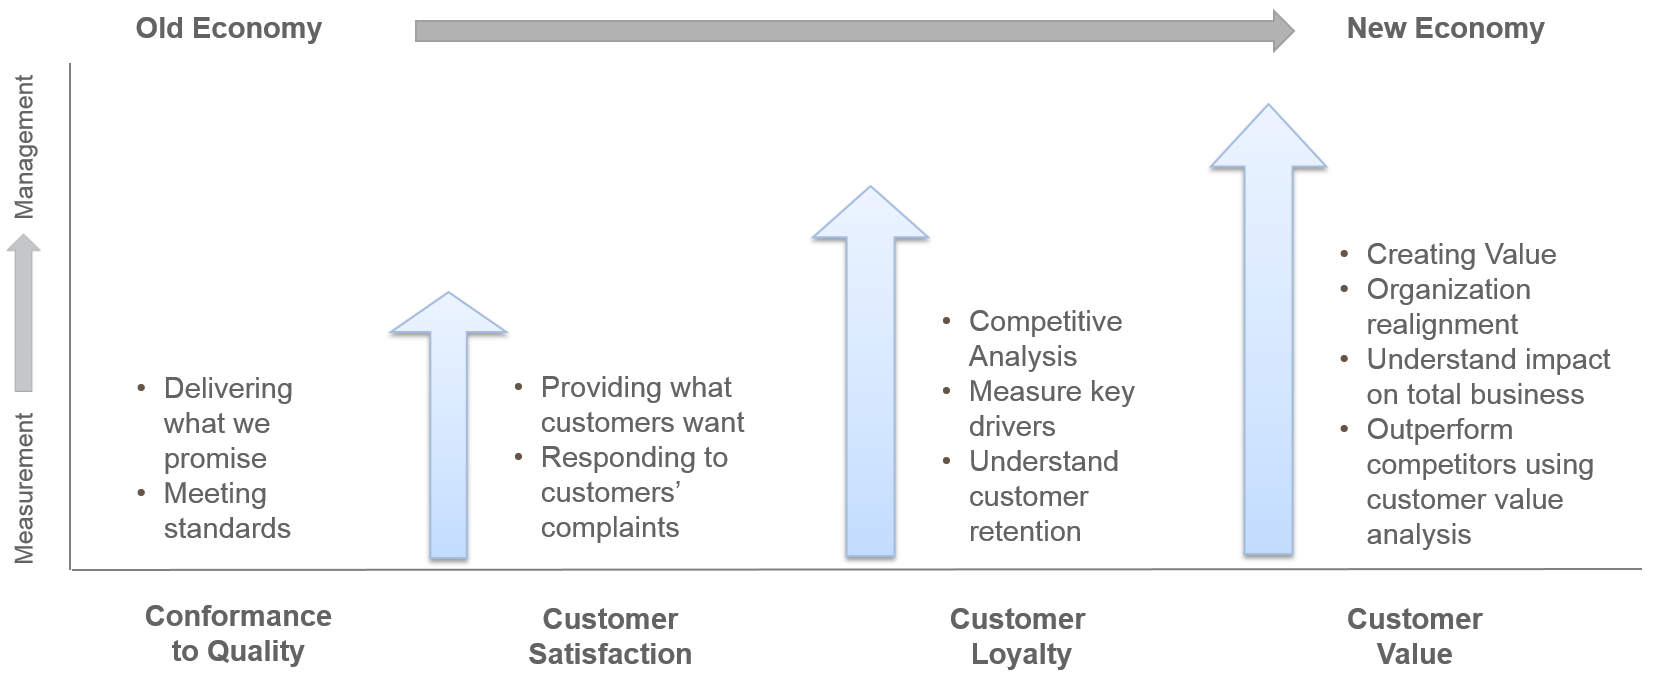 Evolution of customer satisfaction - conformance to quality, customer satisfaction, customer loyalty, customer value